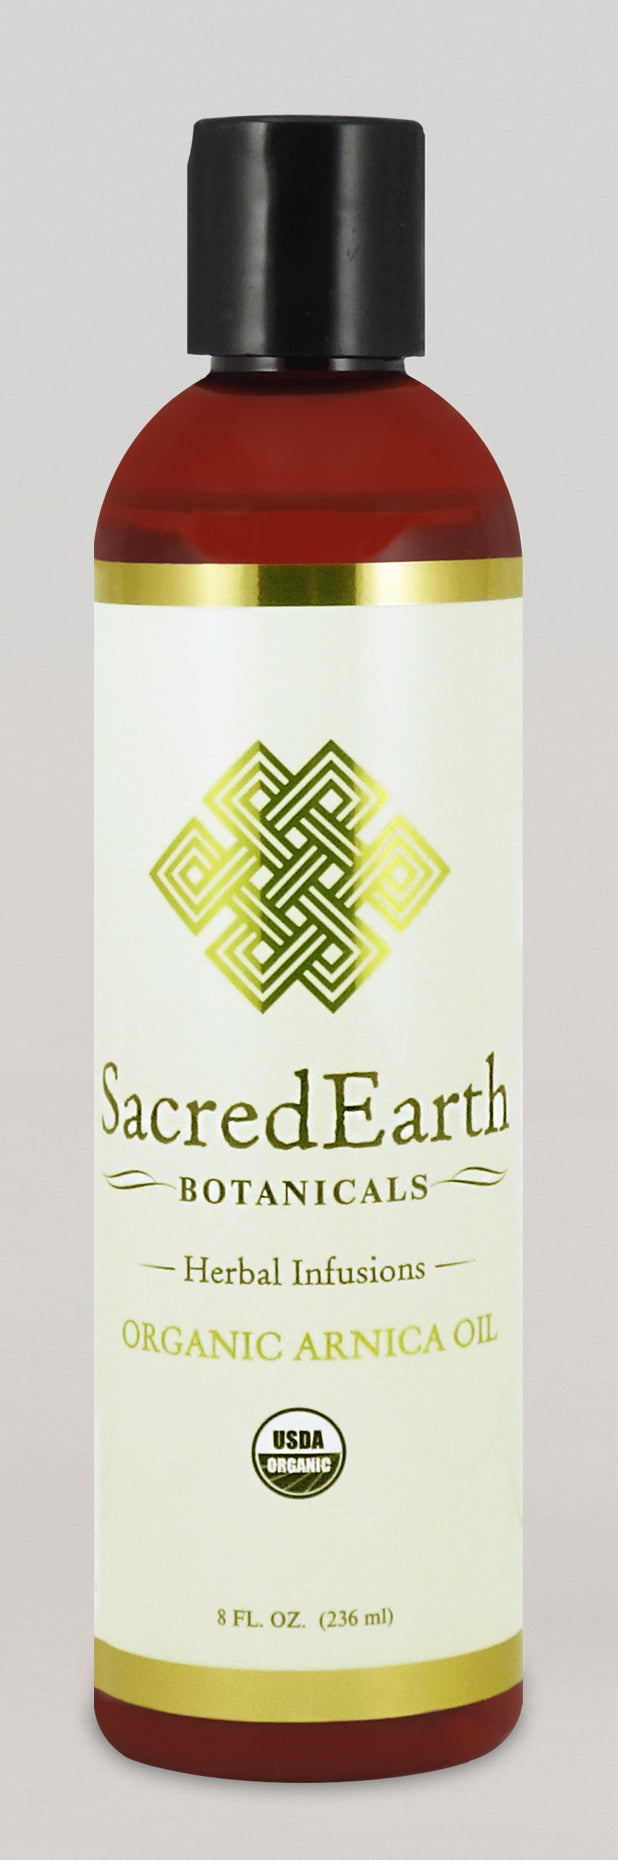 Sacred Earth Organic Arnica Oil - Herbal Infusion